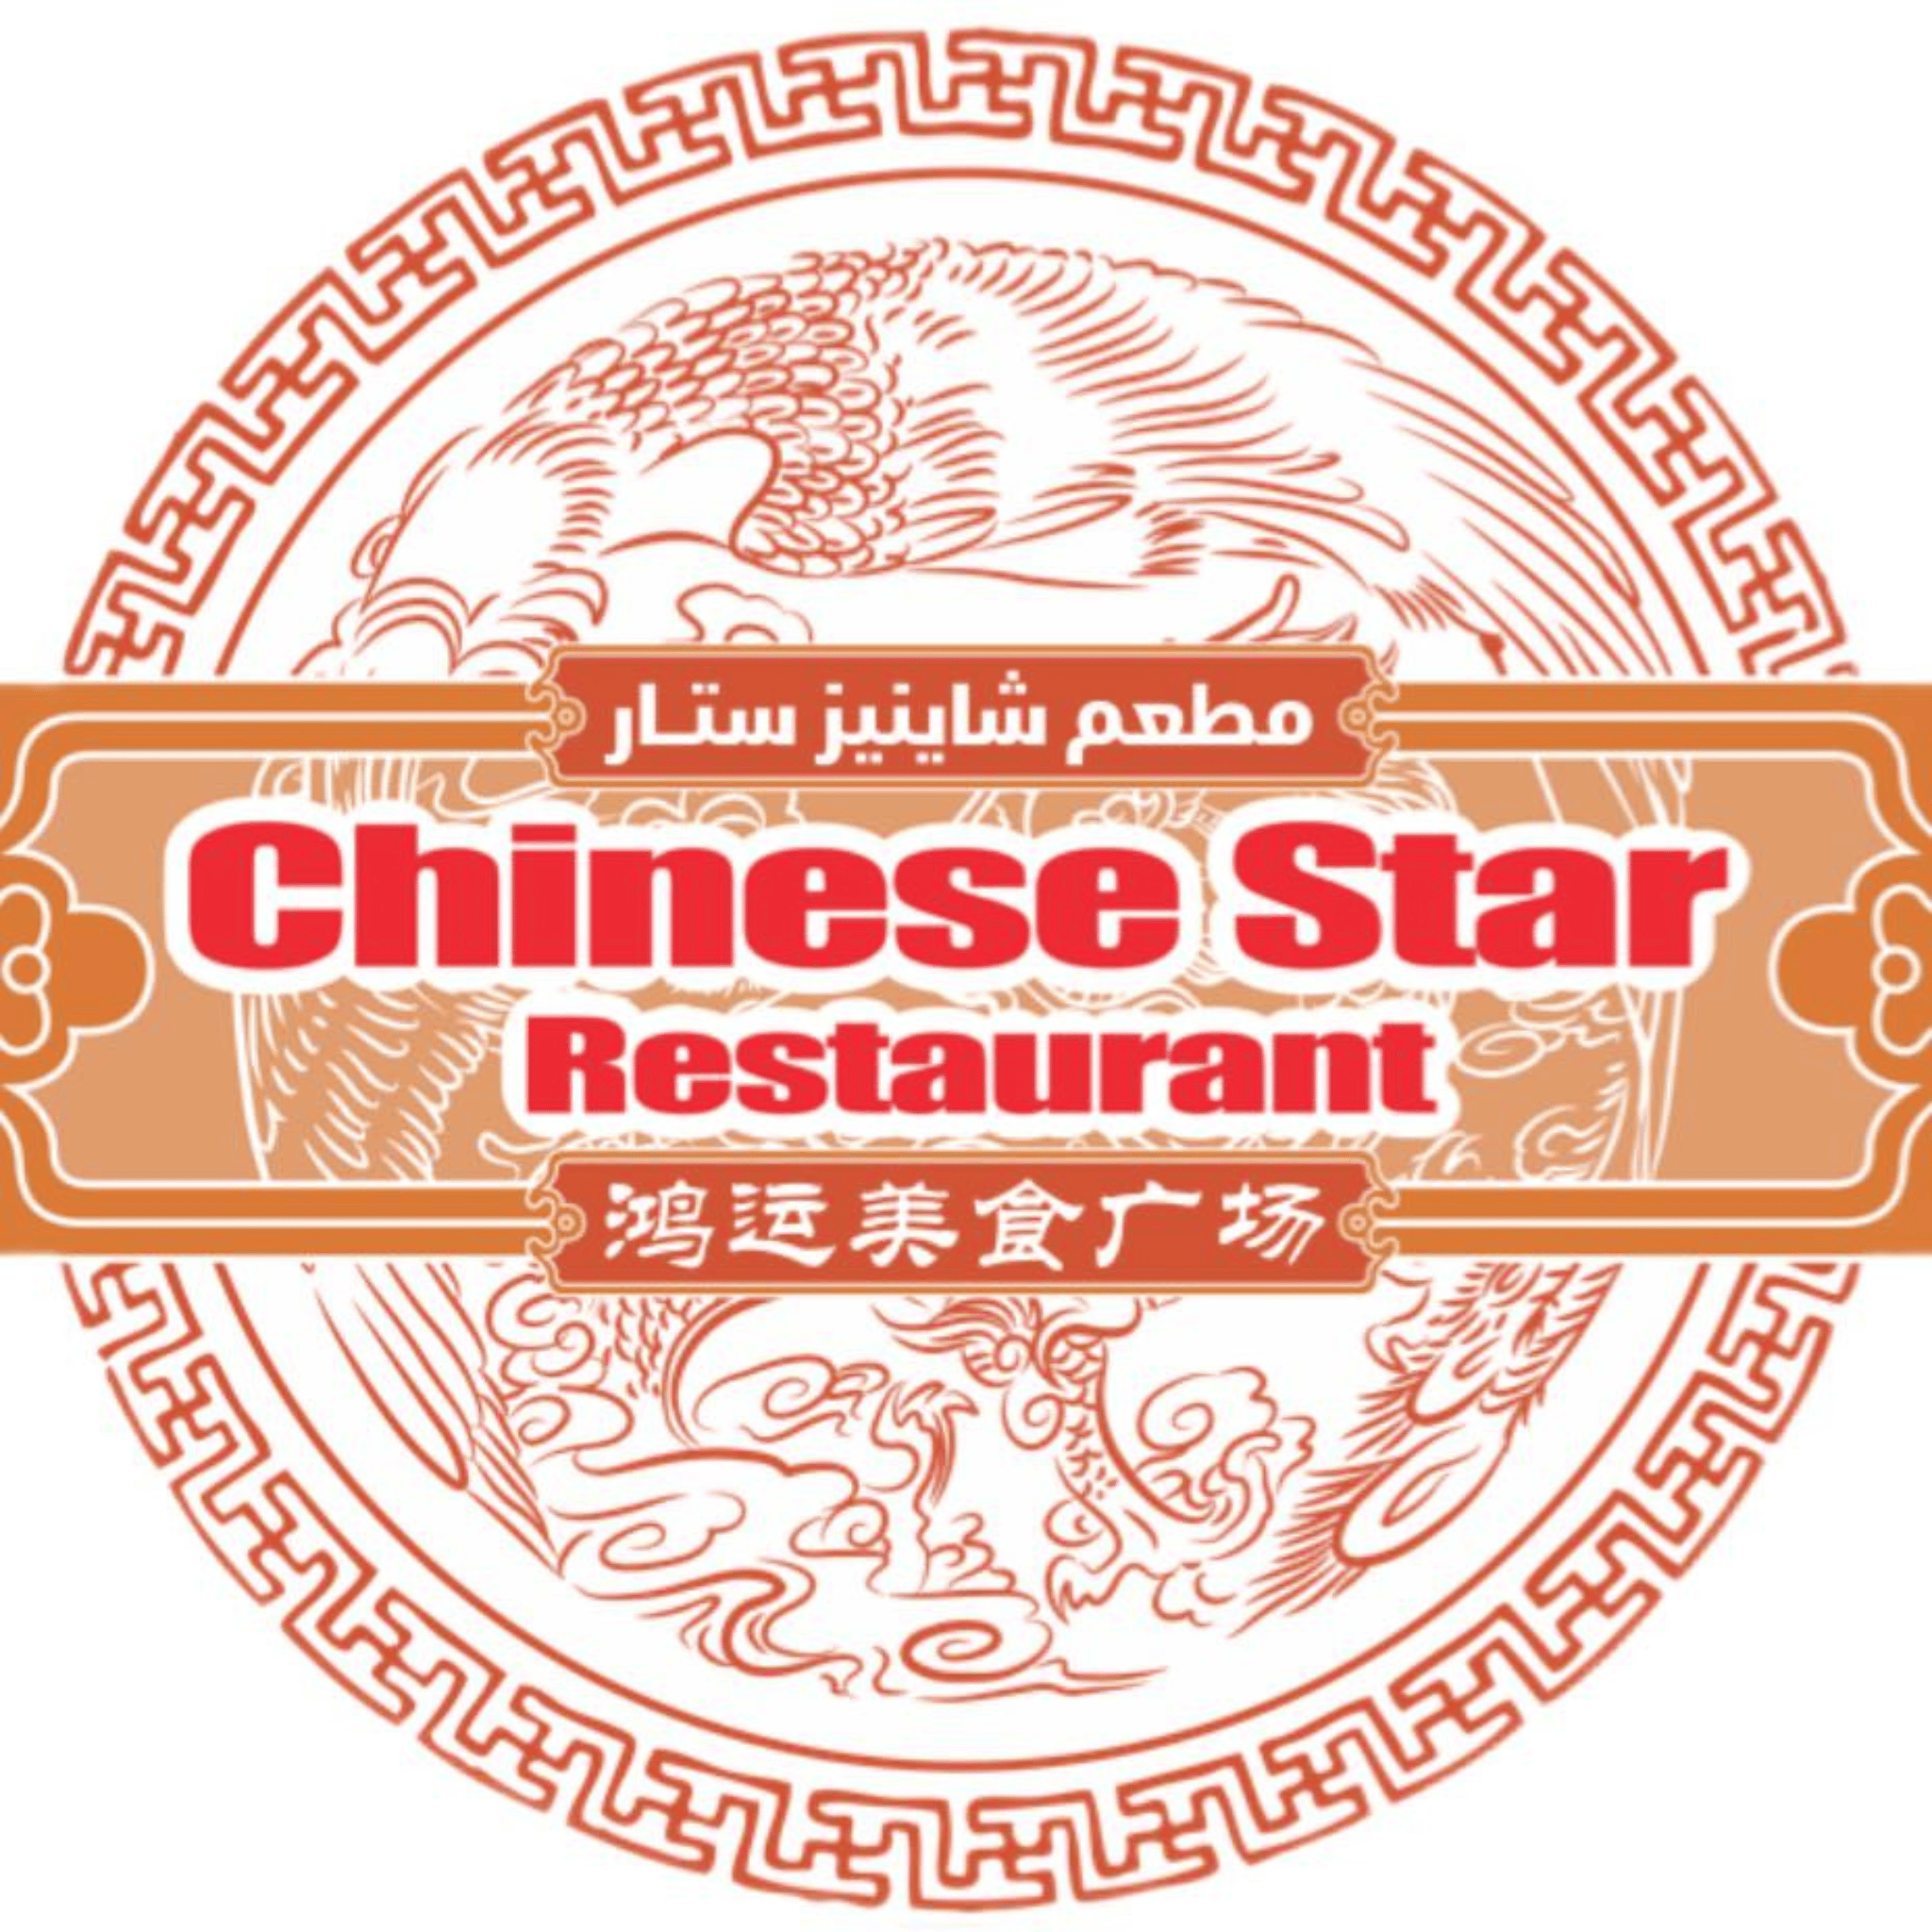 CHINESE STAR RESTAURANT